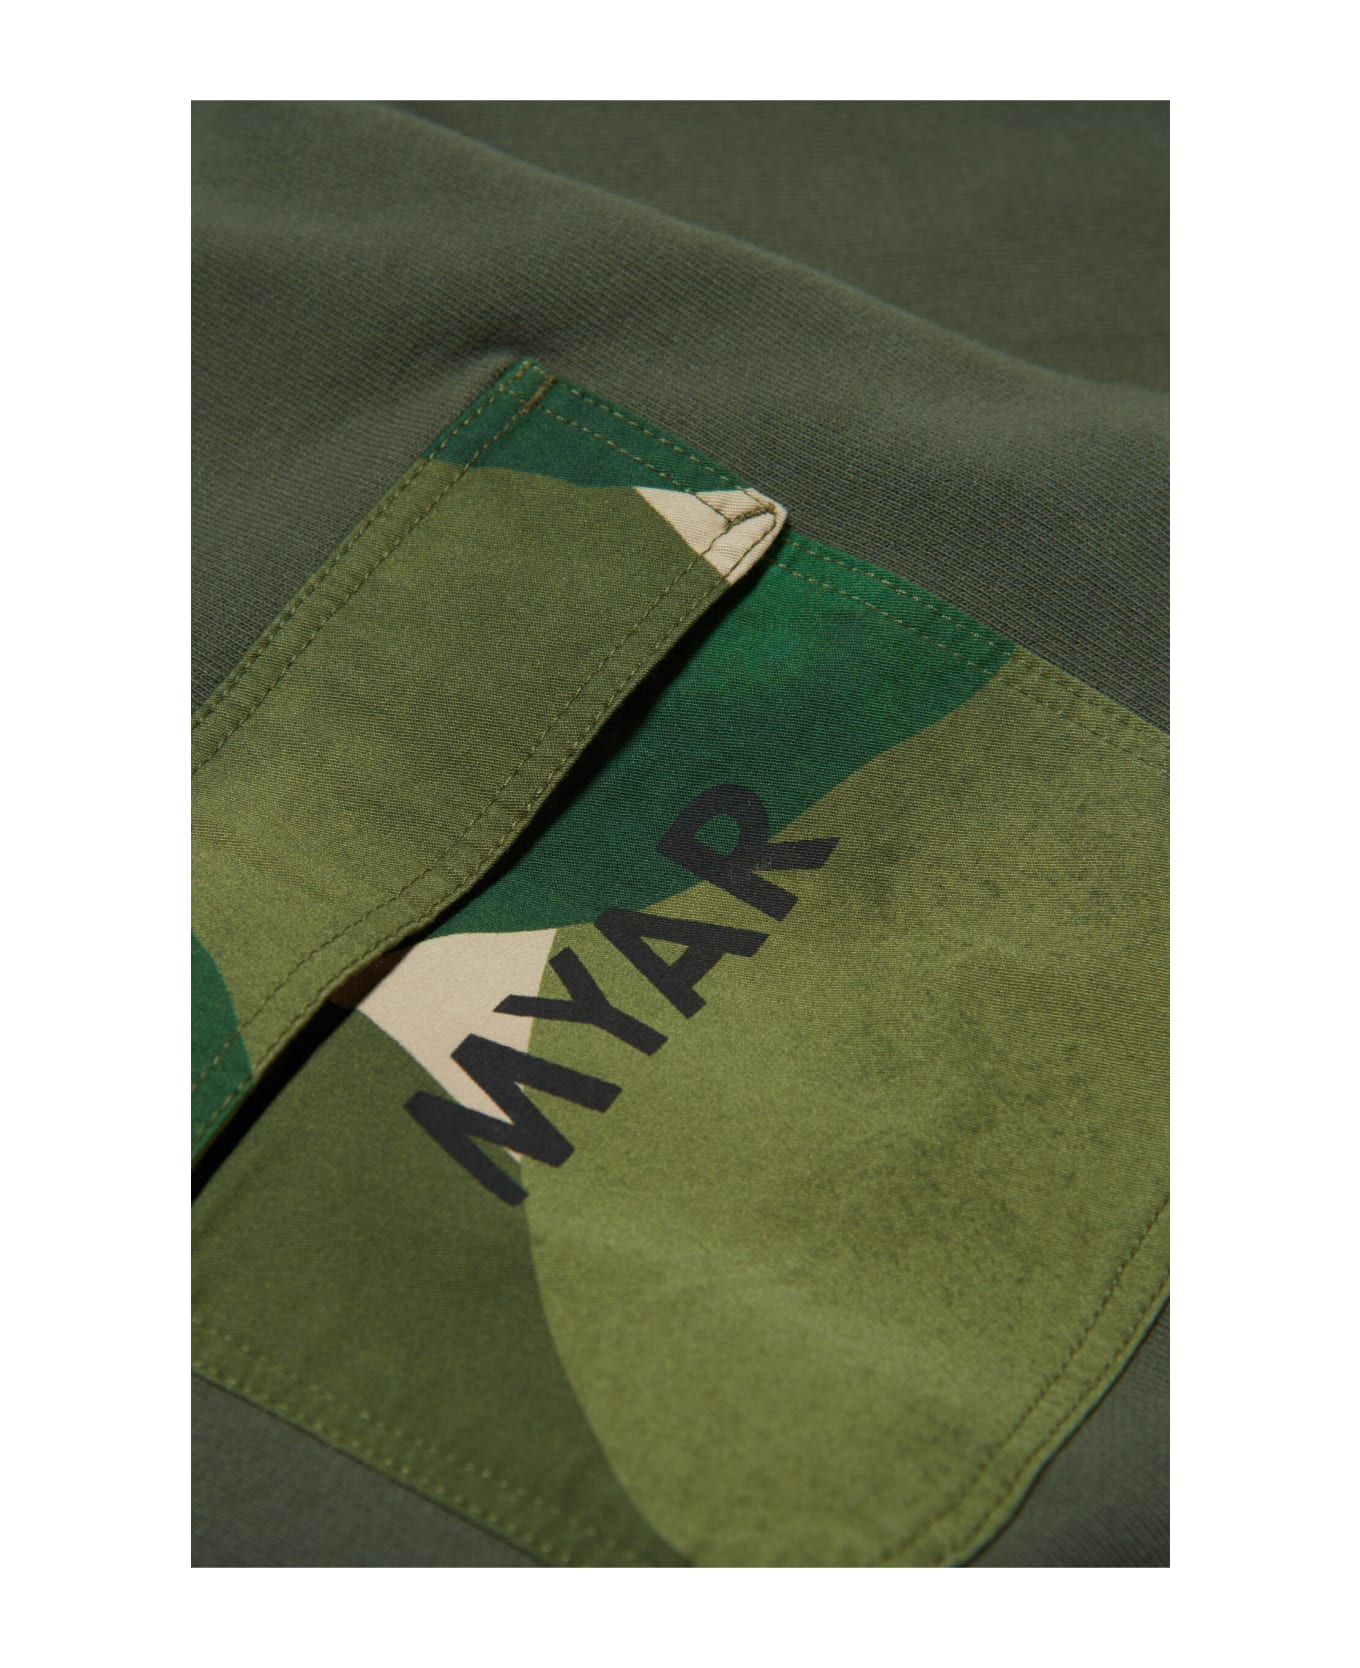 MYAR Mys20u Sweat-shirt Myar Sweatshirt With Pocket And Appliqués Fabric Deadstock Rainforest Pattern - Army green